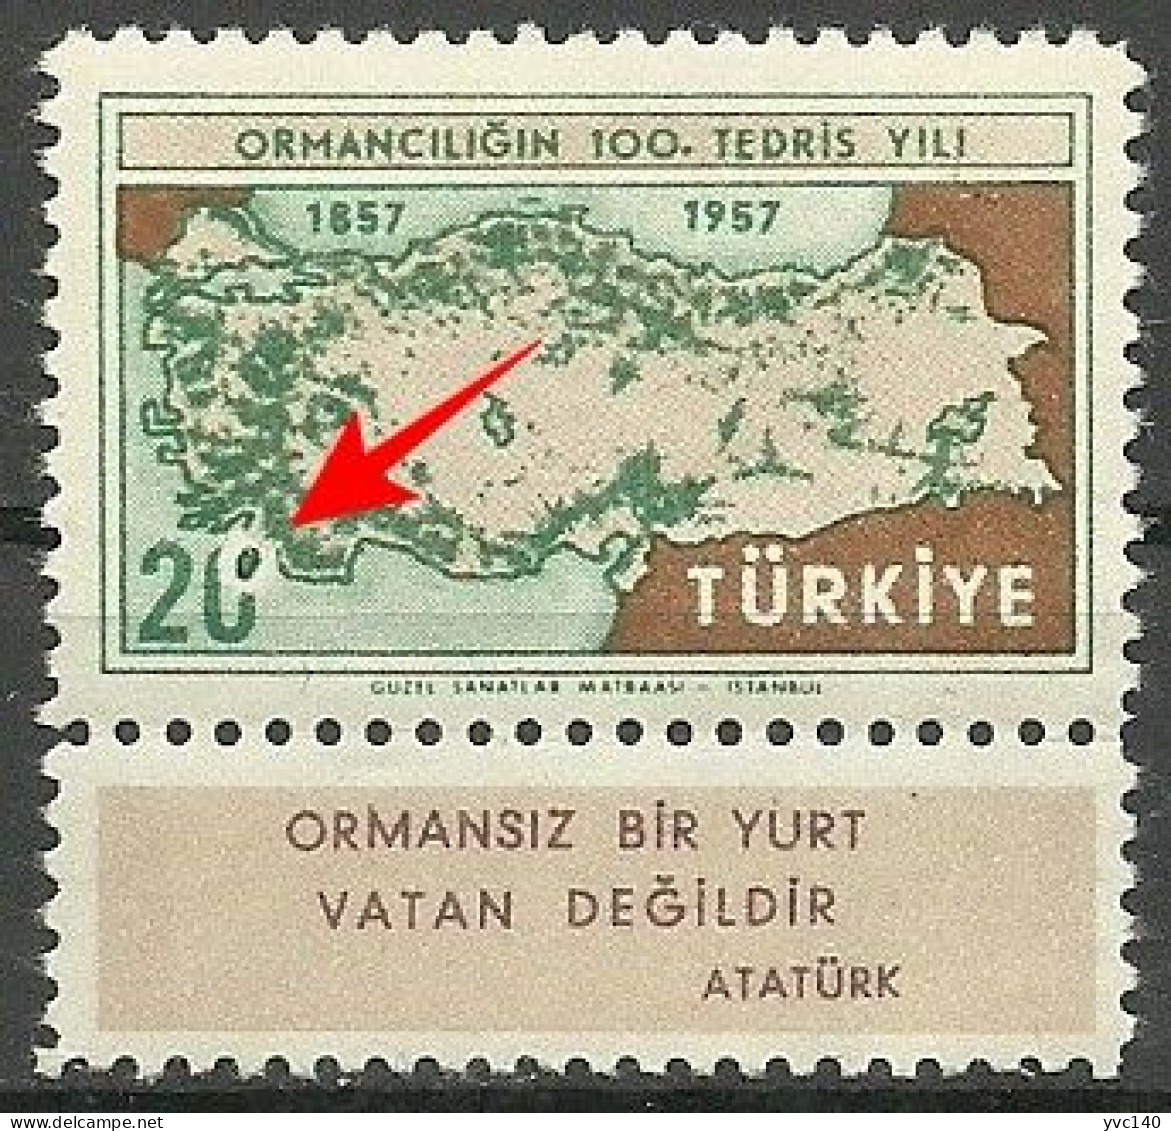 Turkey; 1957 Centenary Of The Instruction Of Forestry In Turkey ERROR "Printing Stain" - Ongebruikt